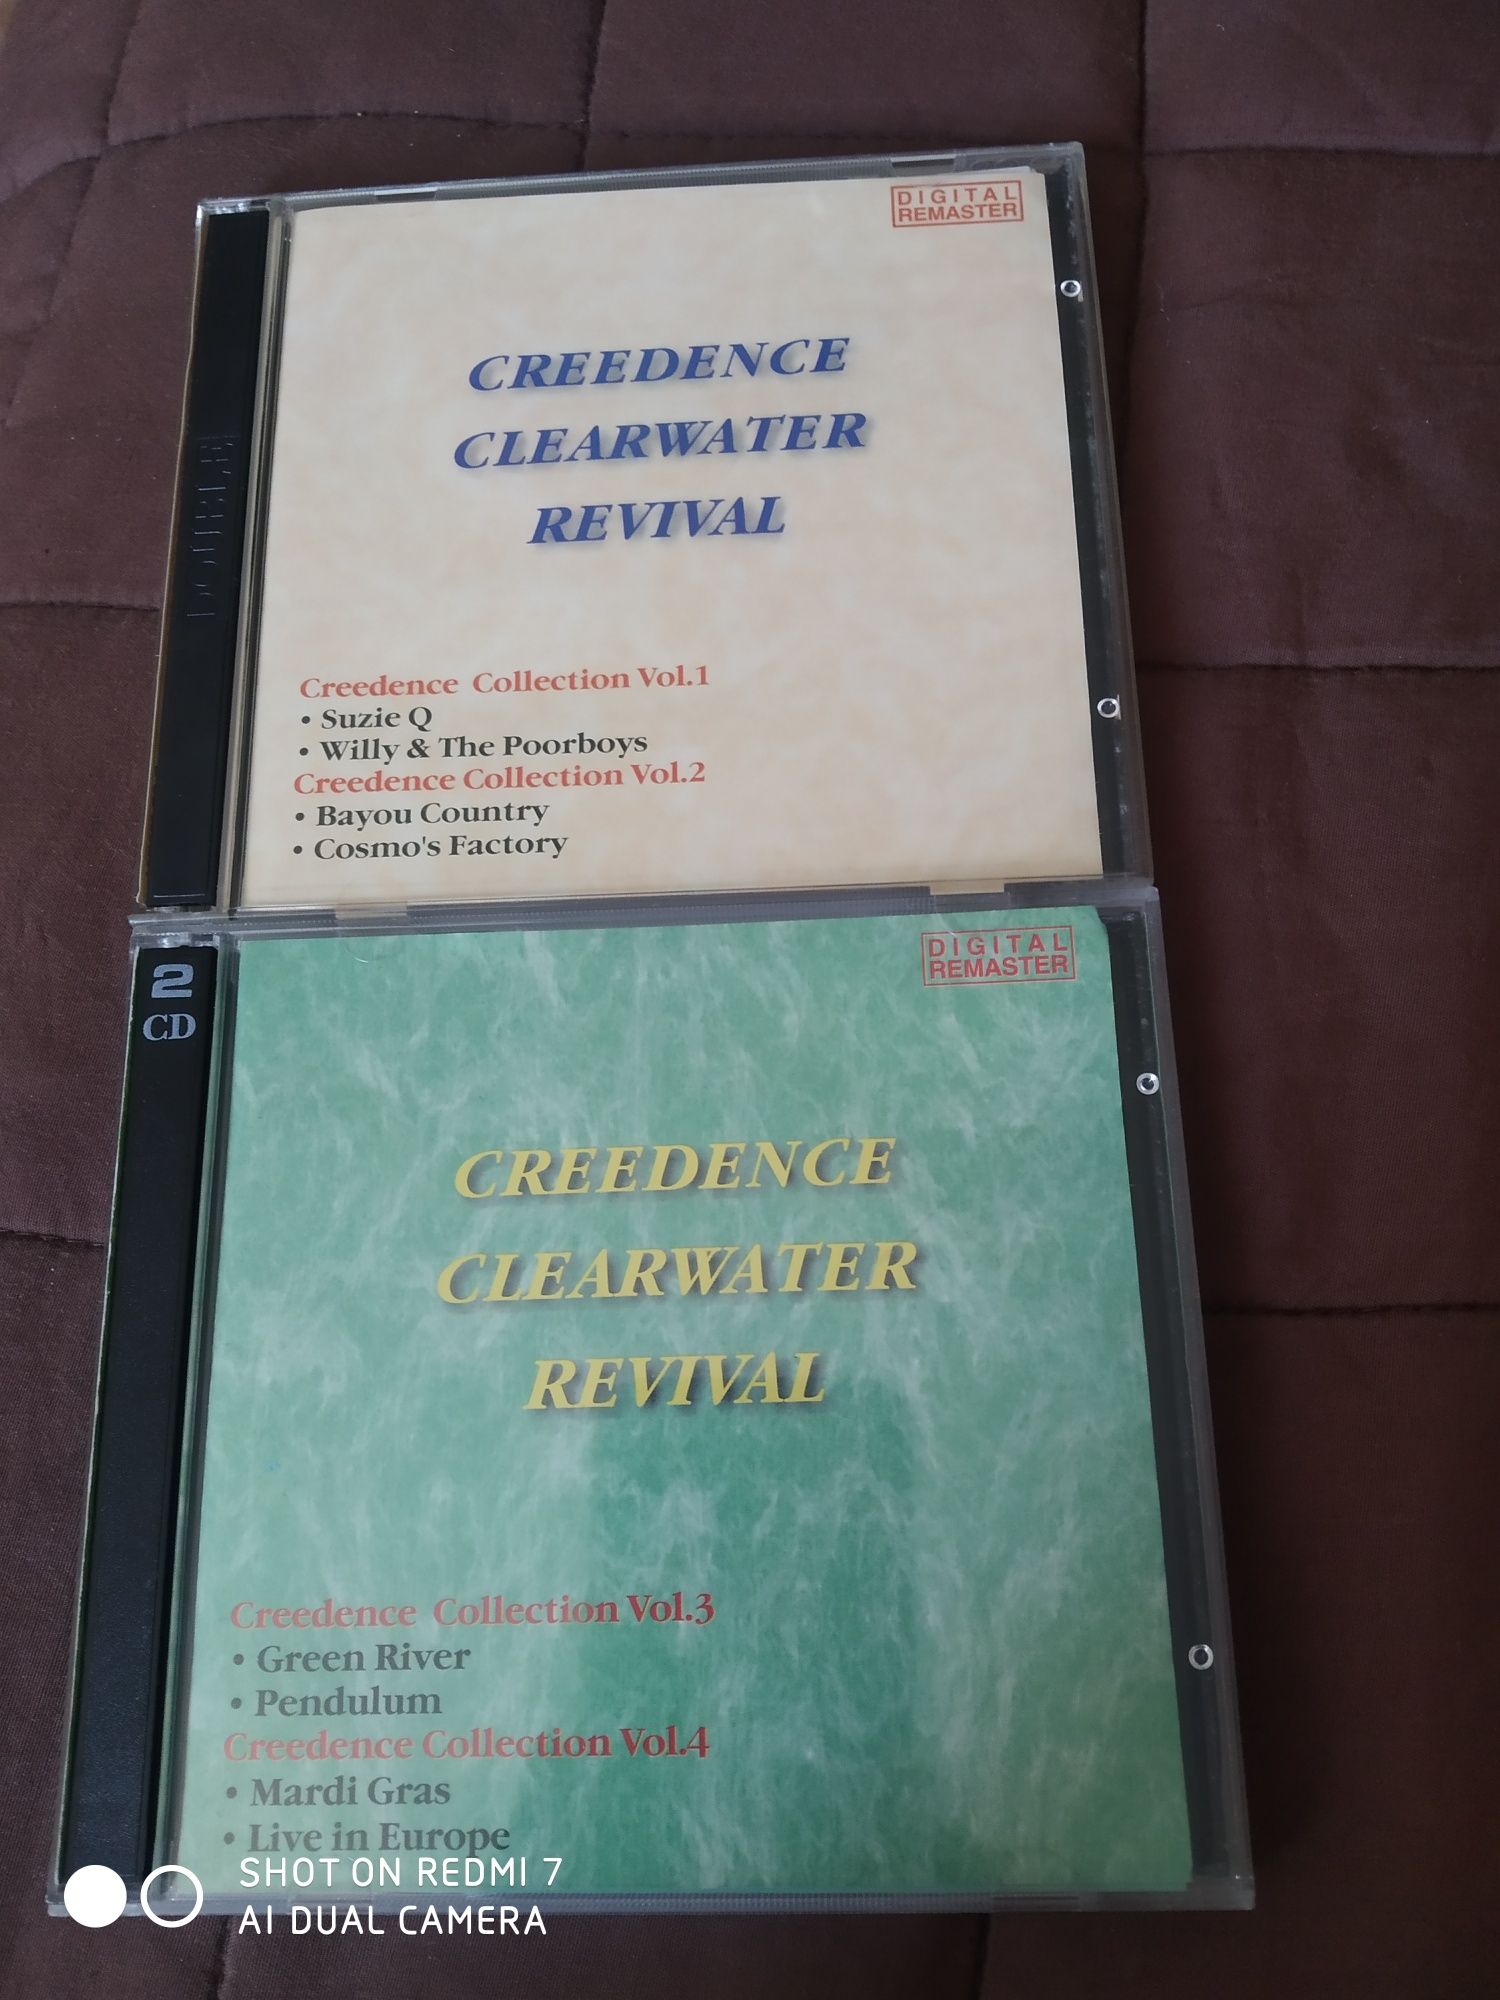 CD Credence vol 1.2.3.4